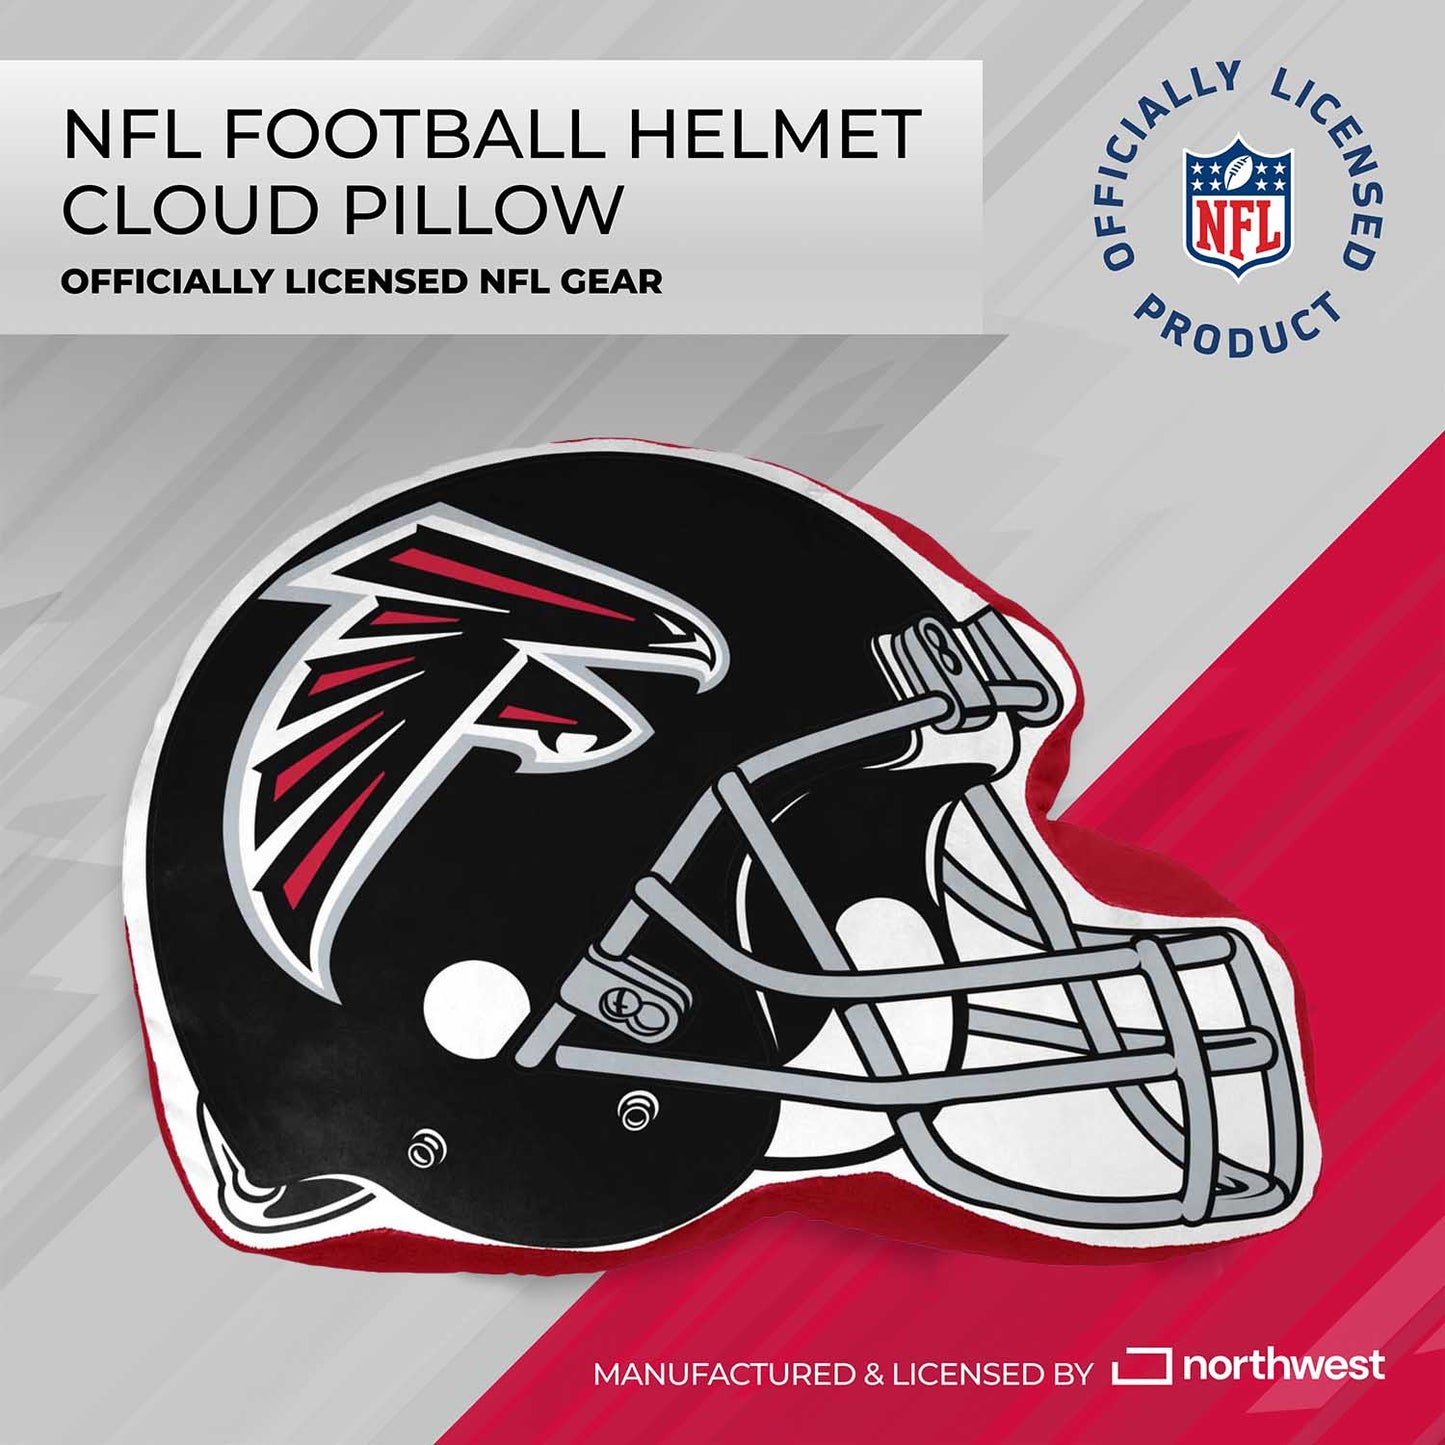 Atlanta Falcons NFL Helmet Football Super Soft Plush Pillow - Red